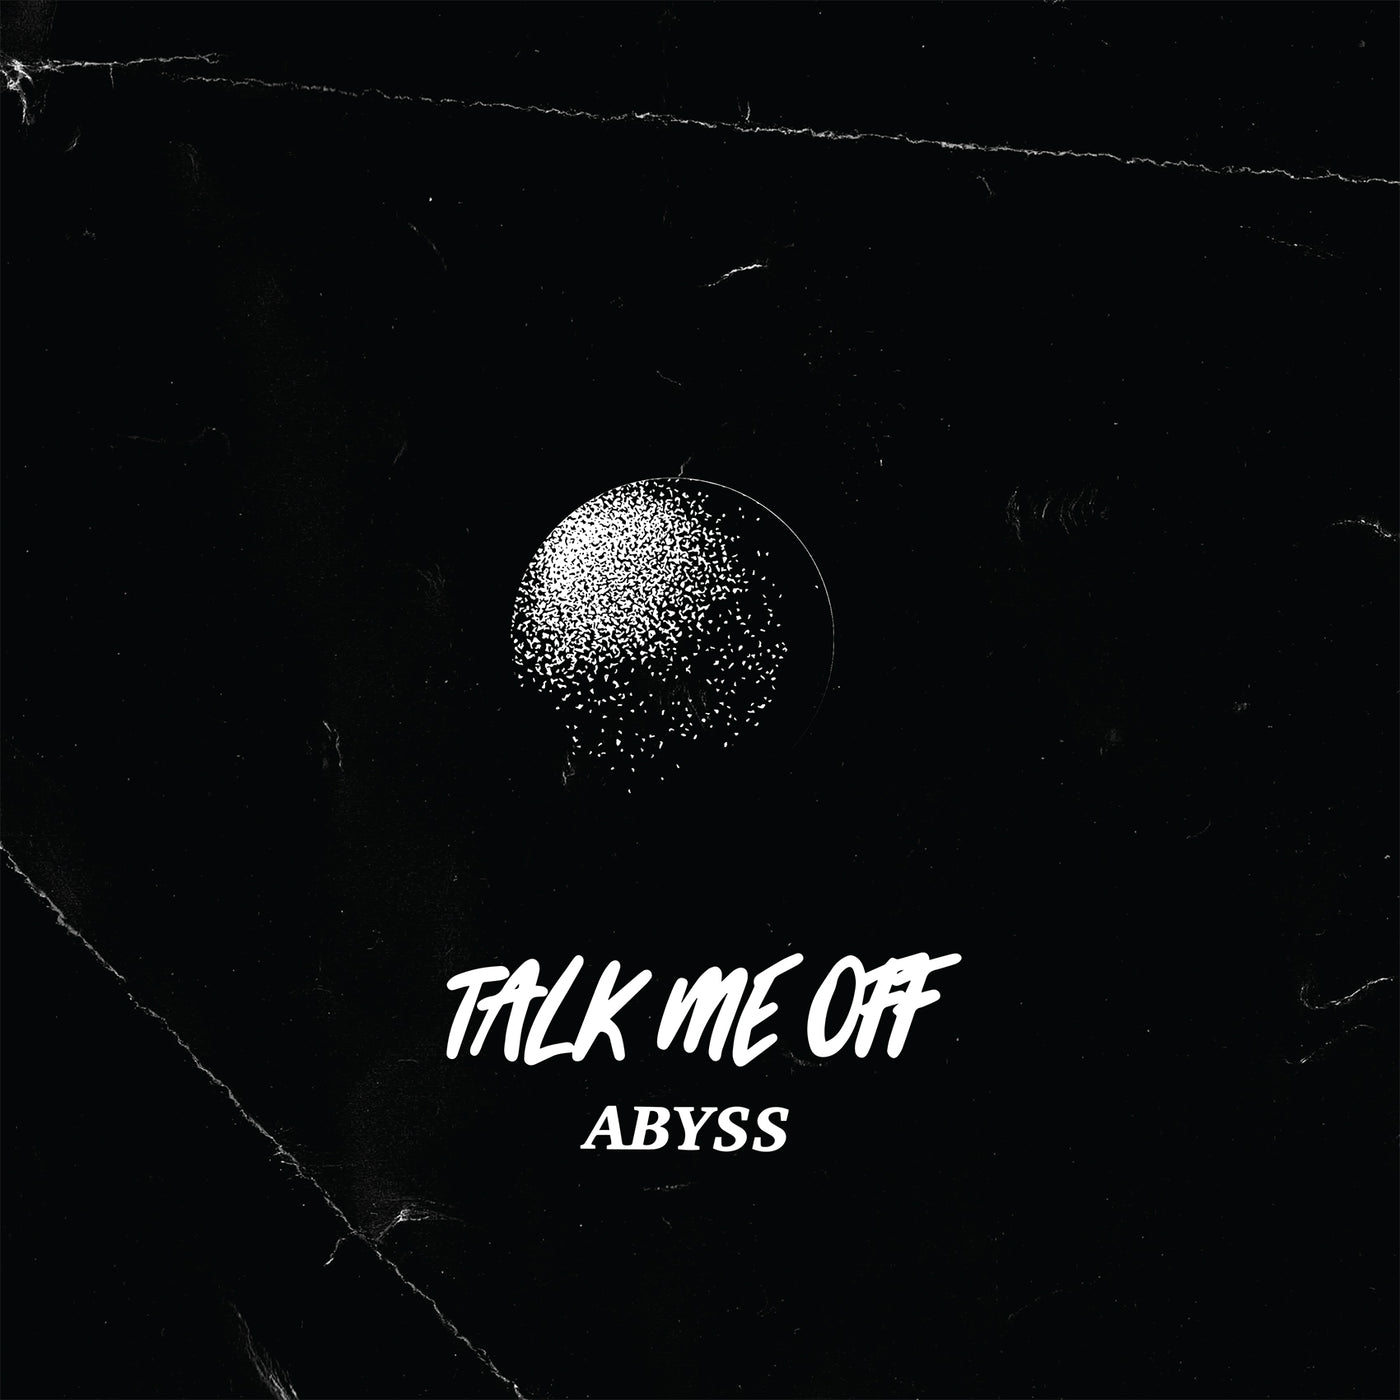 Talk Me Off - Abyss 10"